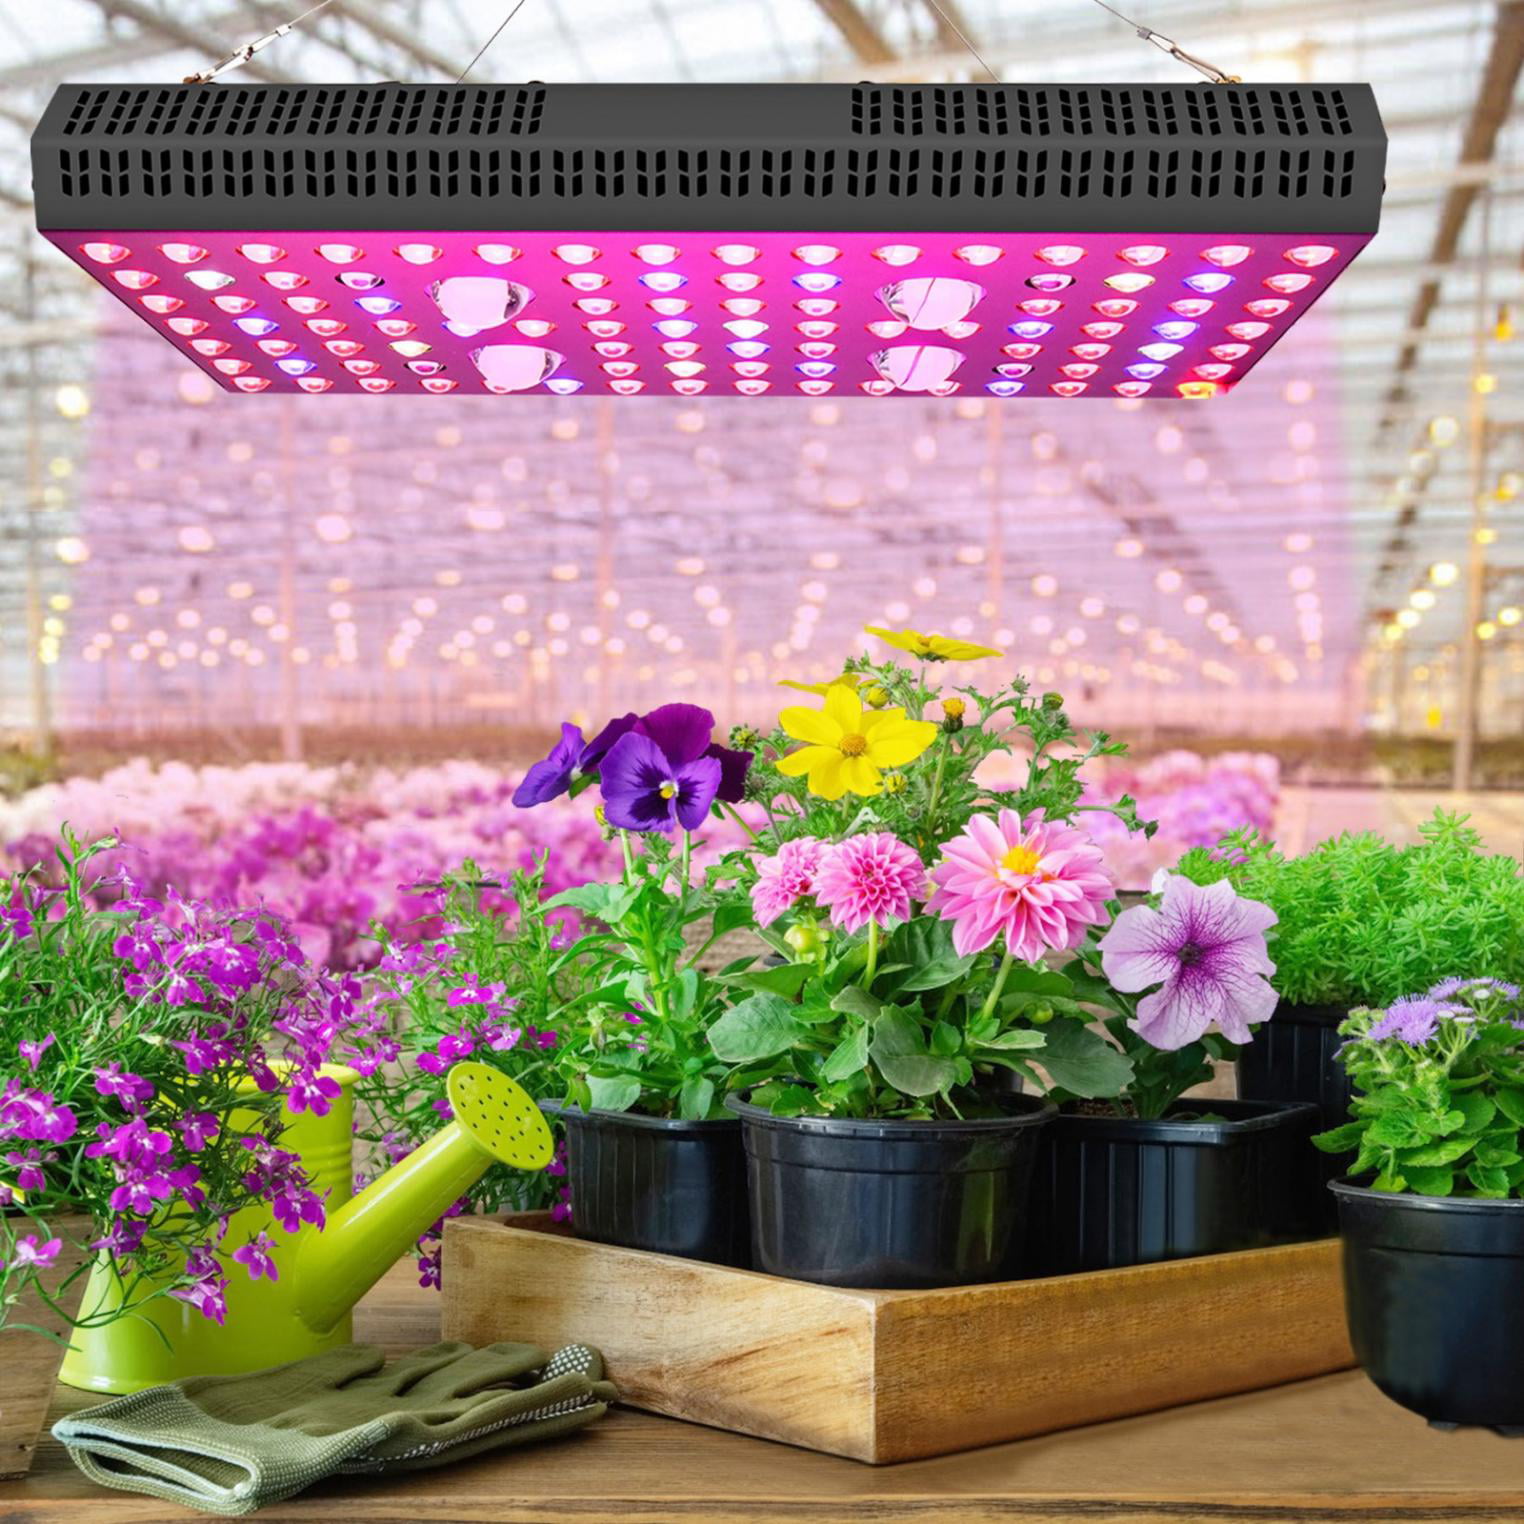 Grow Light Plant Flowering Indoor Greenhouse Bulbs Full Spectrum LED Lamps Panel 